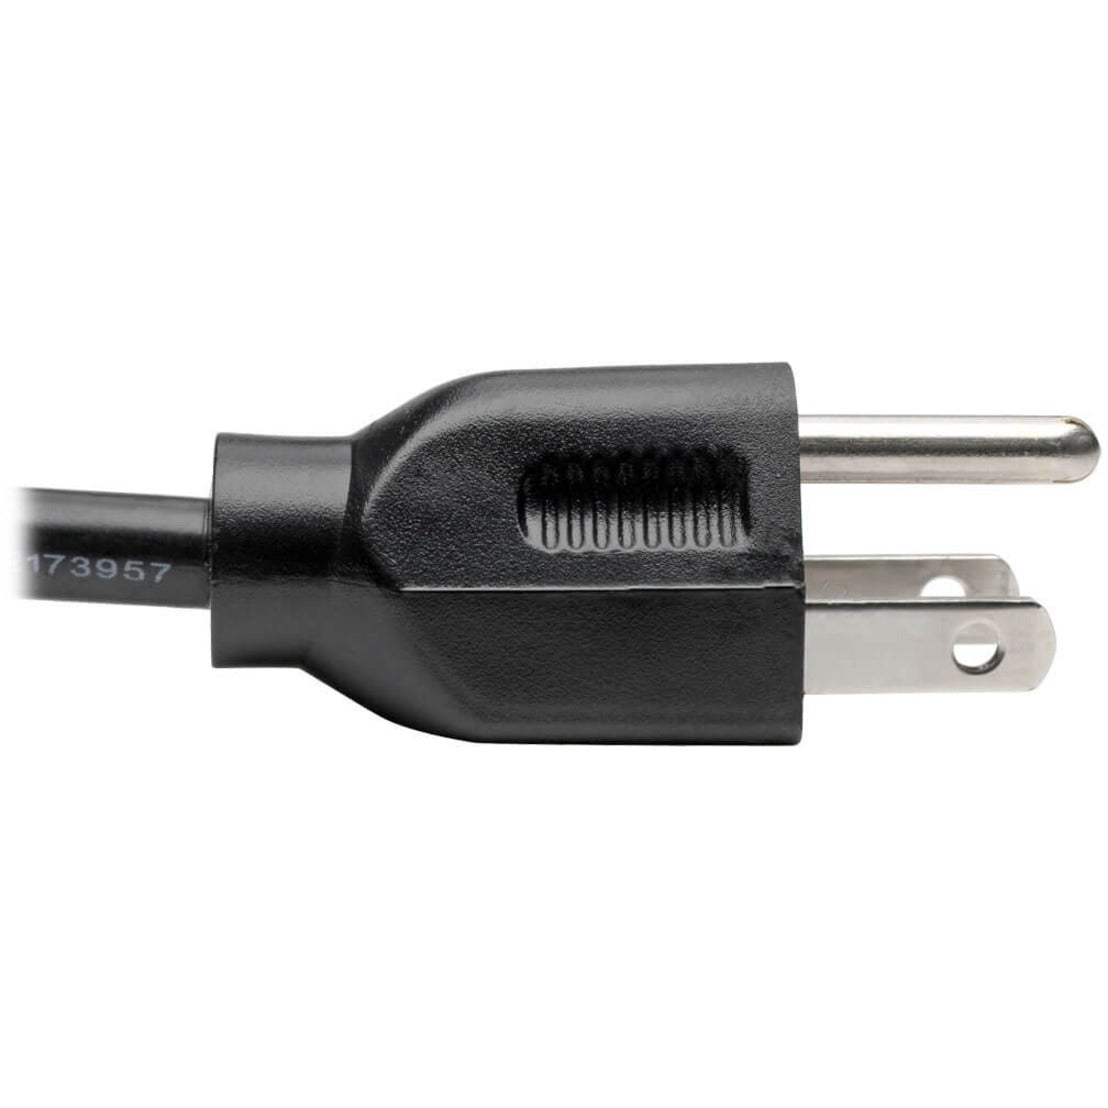 Marca: Tripp Lite Cable divisor de 6 pies cable de alimentación P006-006-2 NEMA 5-15P a 2 x Cable divisor de C13